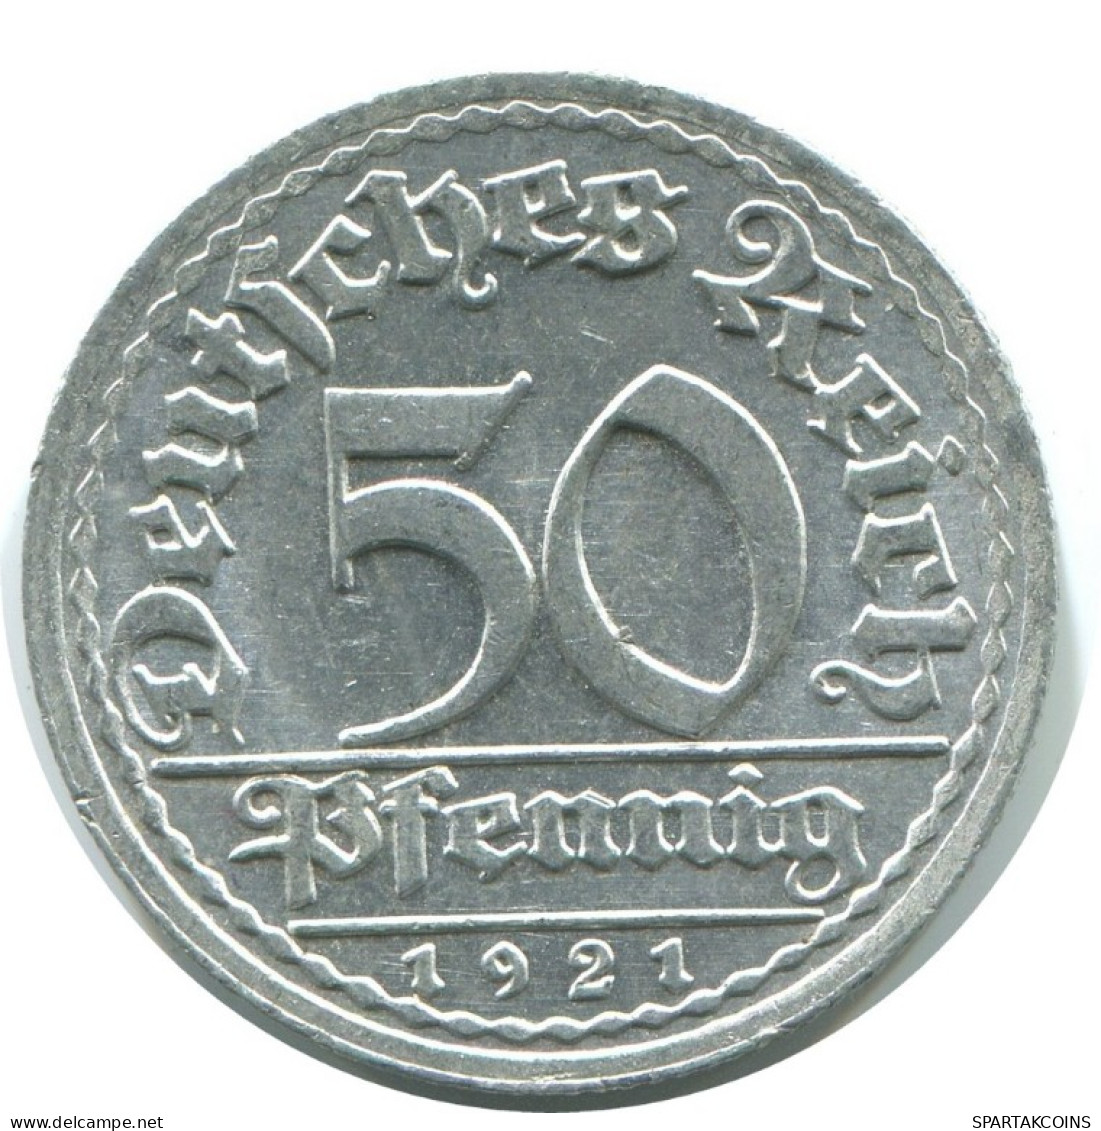 50 PFENNIG 1921 A GERMANY Coin #AE422.U.A - 50 Rentenpfennig & 50 Reichspfennig